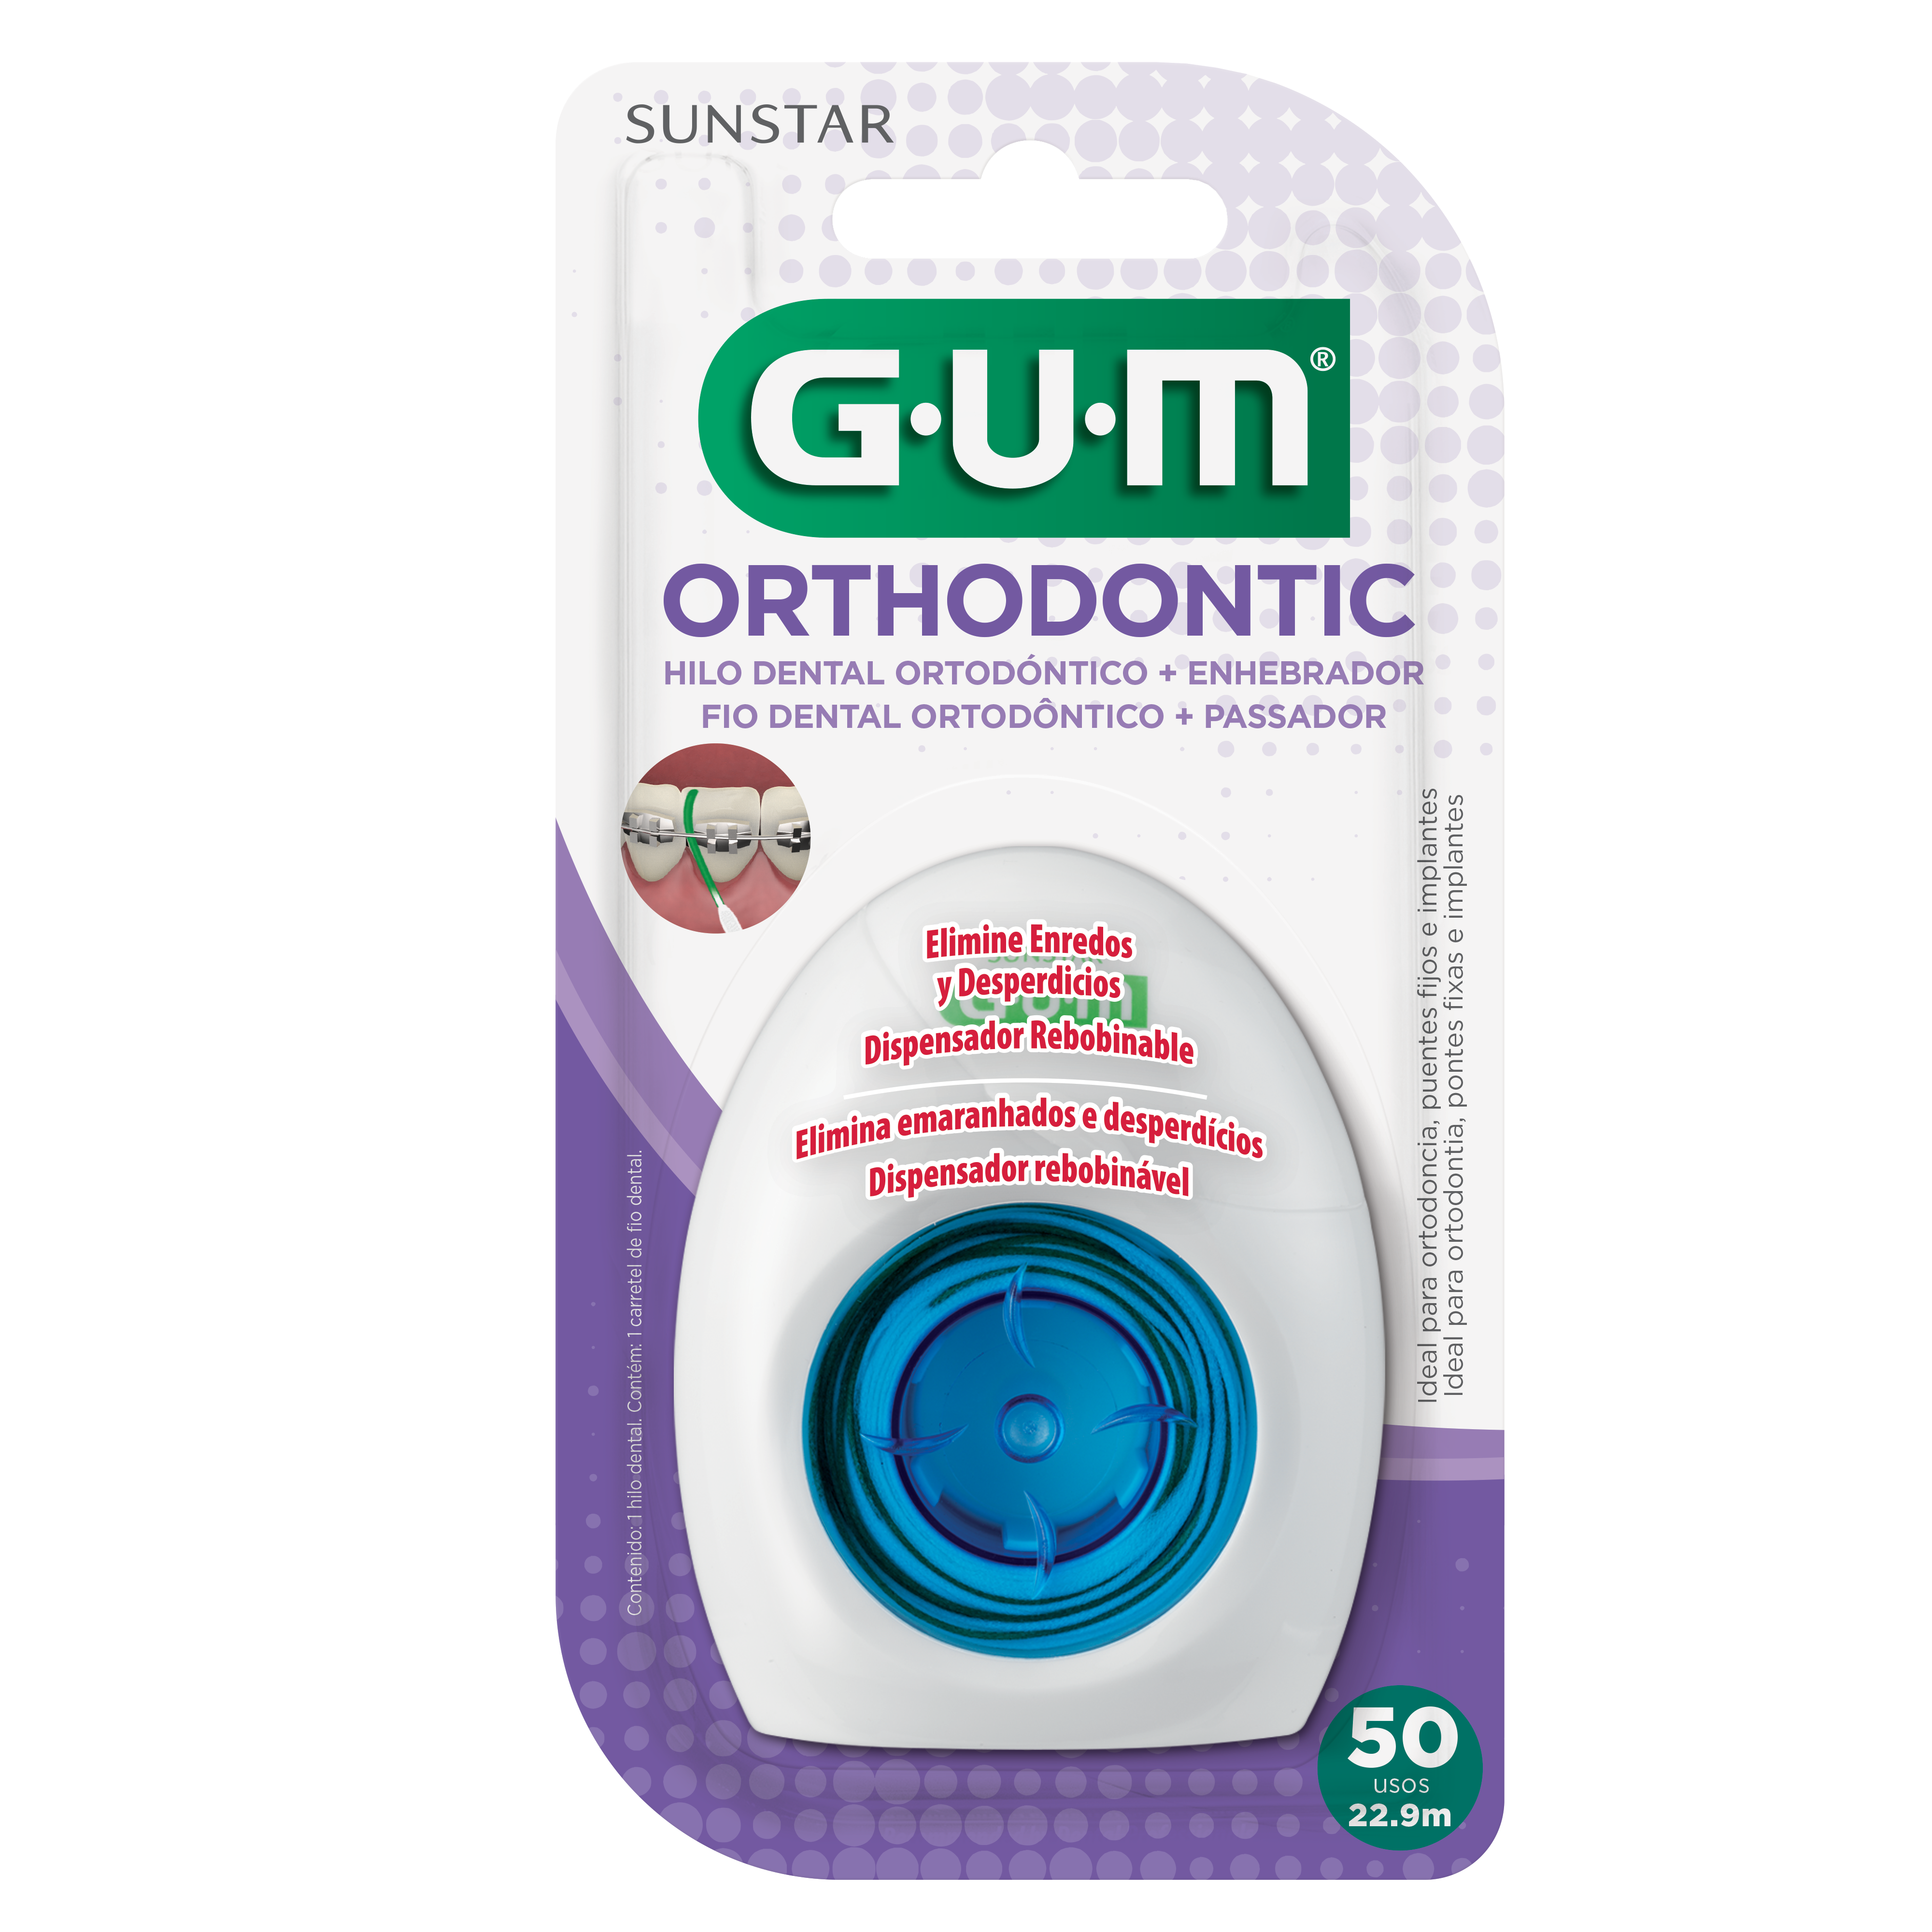 GUM Orthodontic Hilo Dental � 22.9m / 50 usos